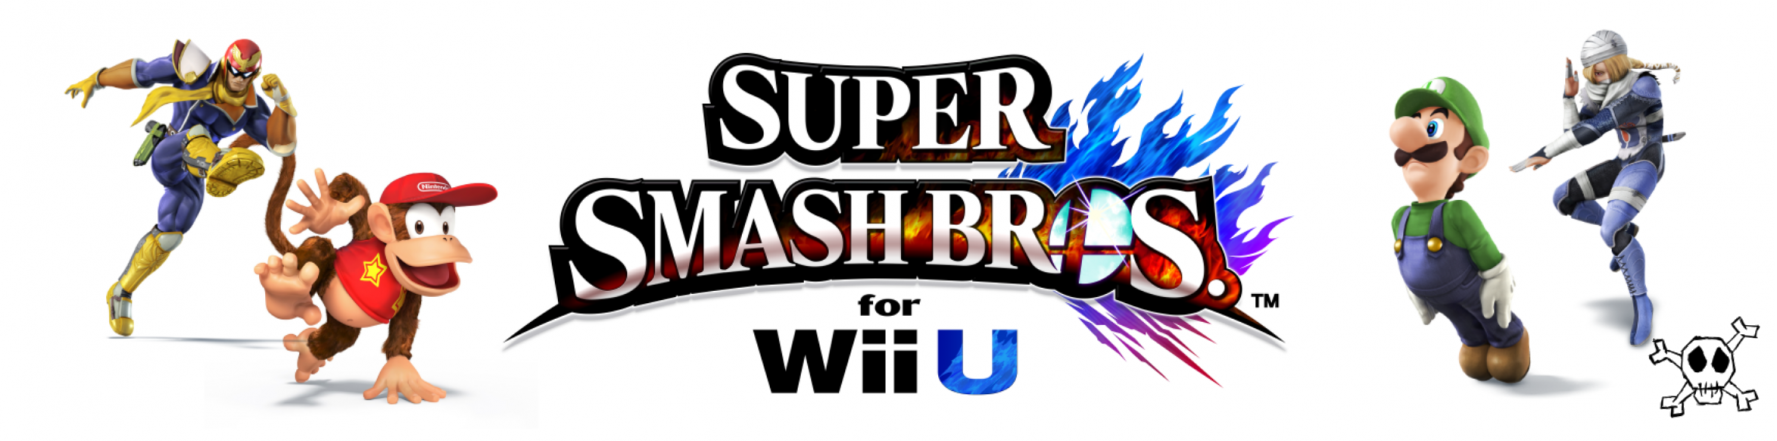 Super Smash Bros. Wii U and Amiibos